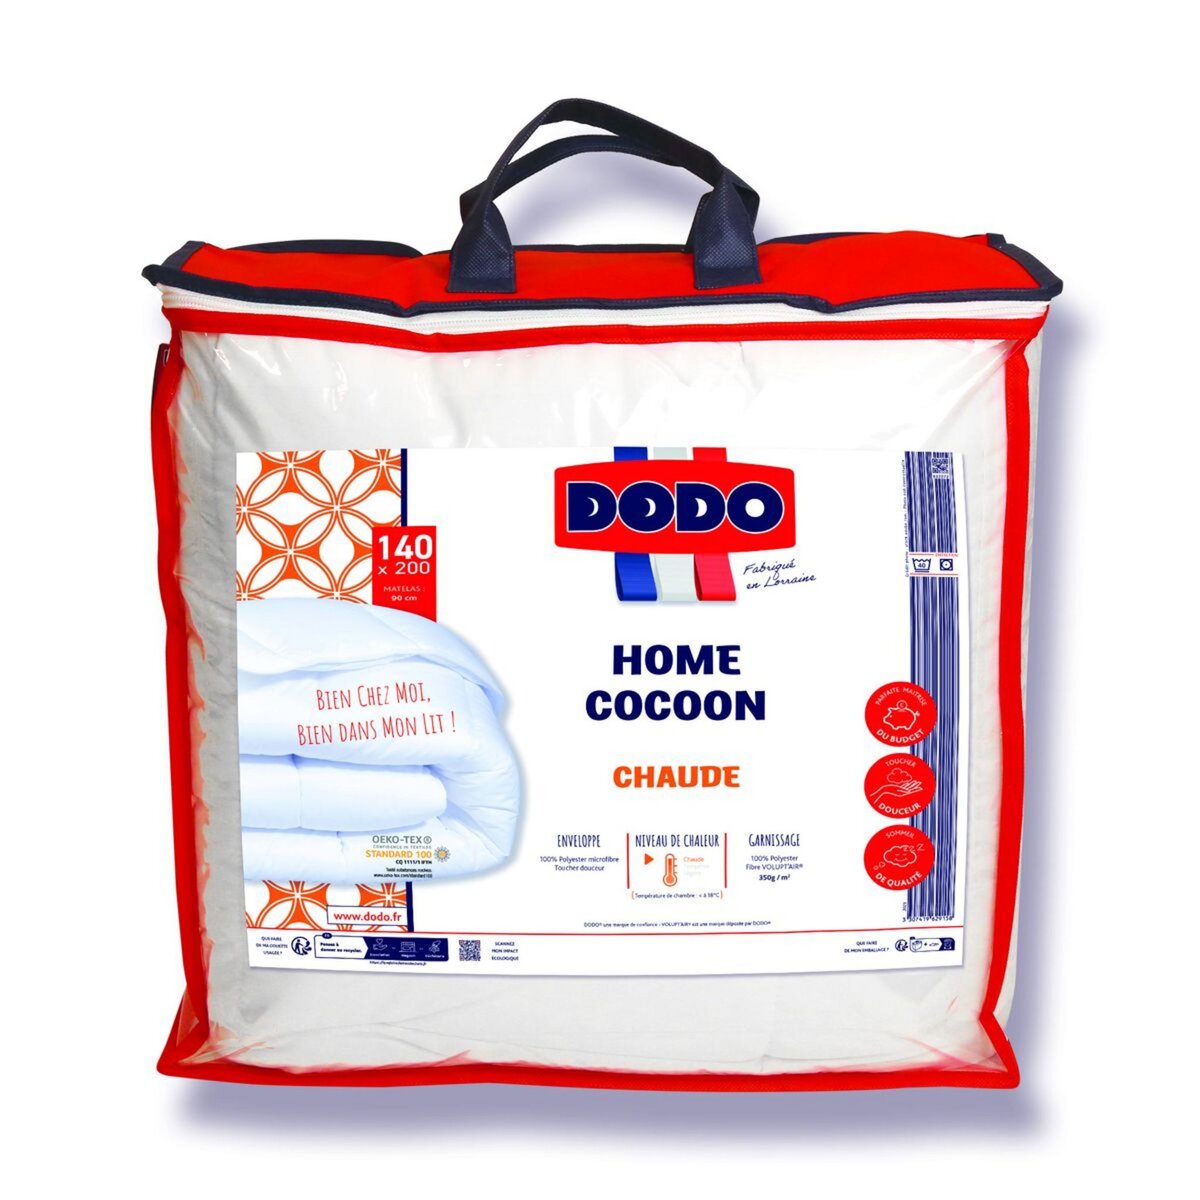 Dodo - couette 220x240 cocooning chaude - Conforama